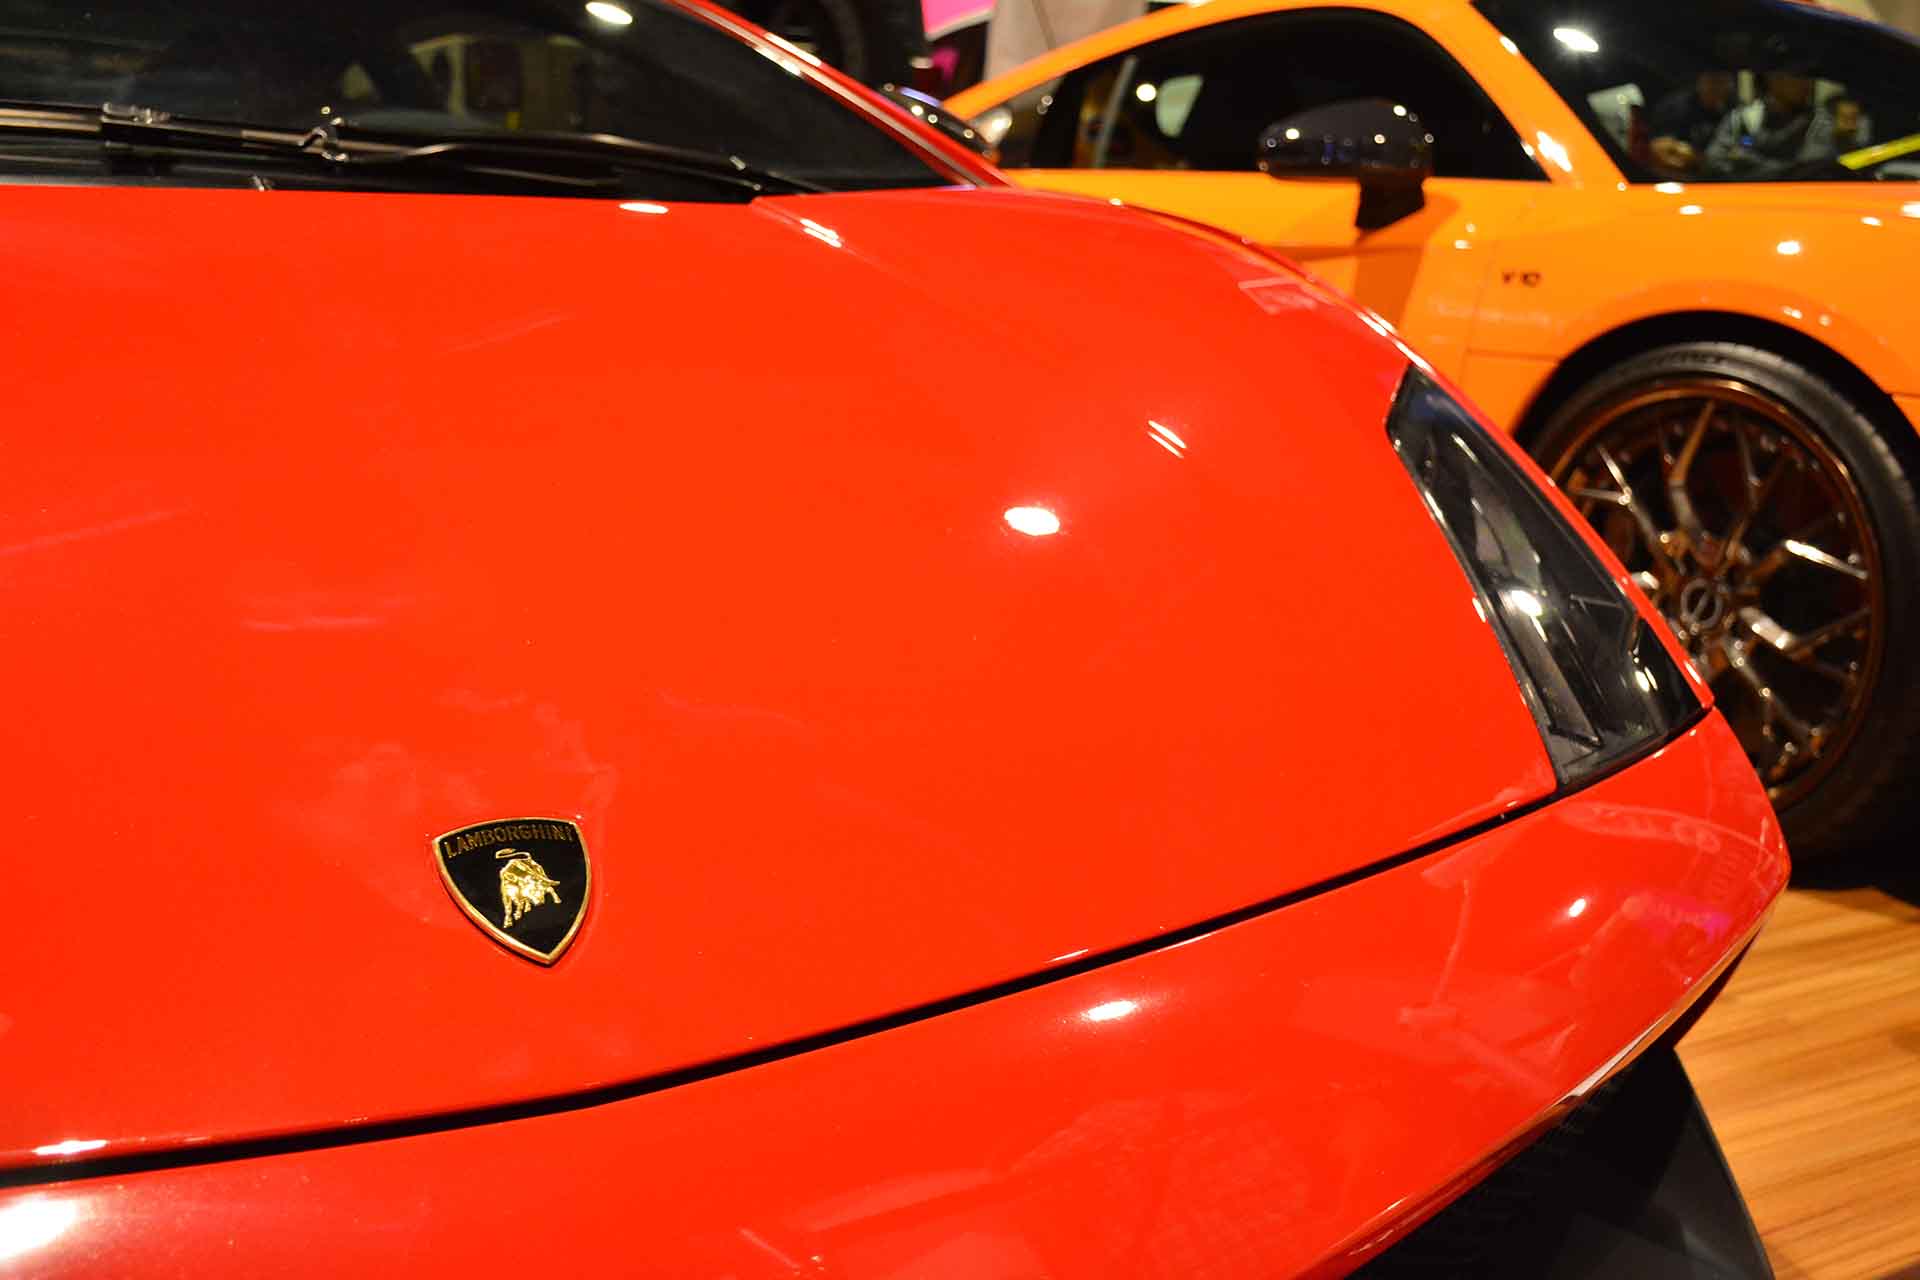 The nose of an orange Lamborghini Gallardo at a car show with a Lamborghini Urus in the background.